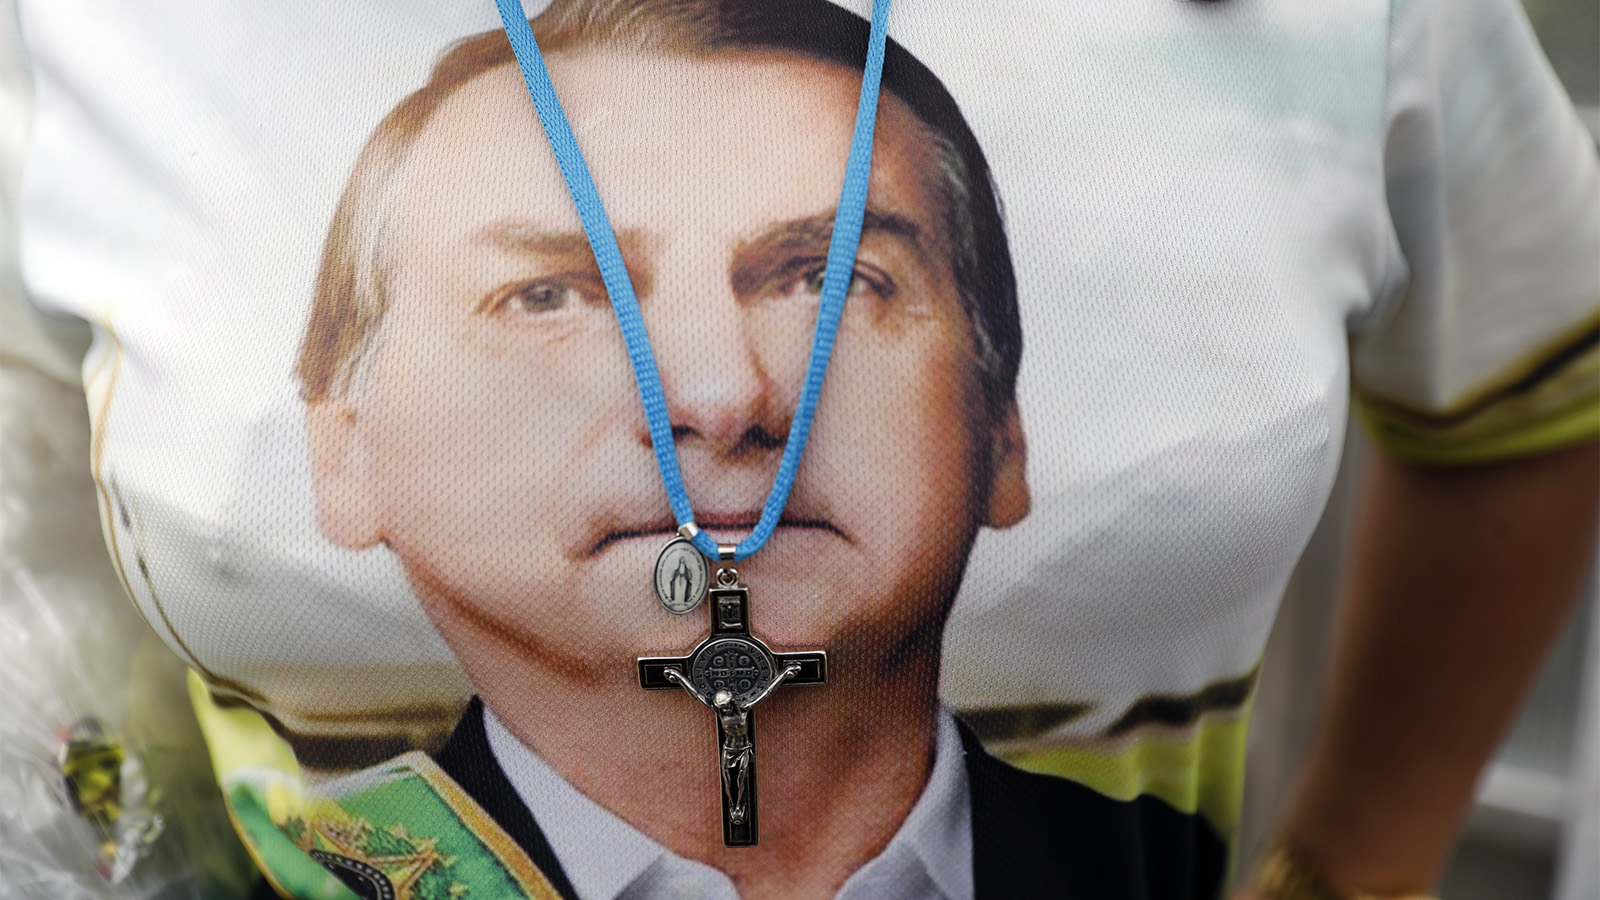 A supporter of Brazilian President Jair Bolsonaro wears a crucifix necklace over a shirt with Bolsonaro’s likeness prior to his inauguration, in Brasilia, Brazil, on Jan. 1, 2019. (AP Photo/Silvia Izquierdo)